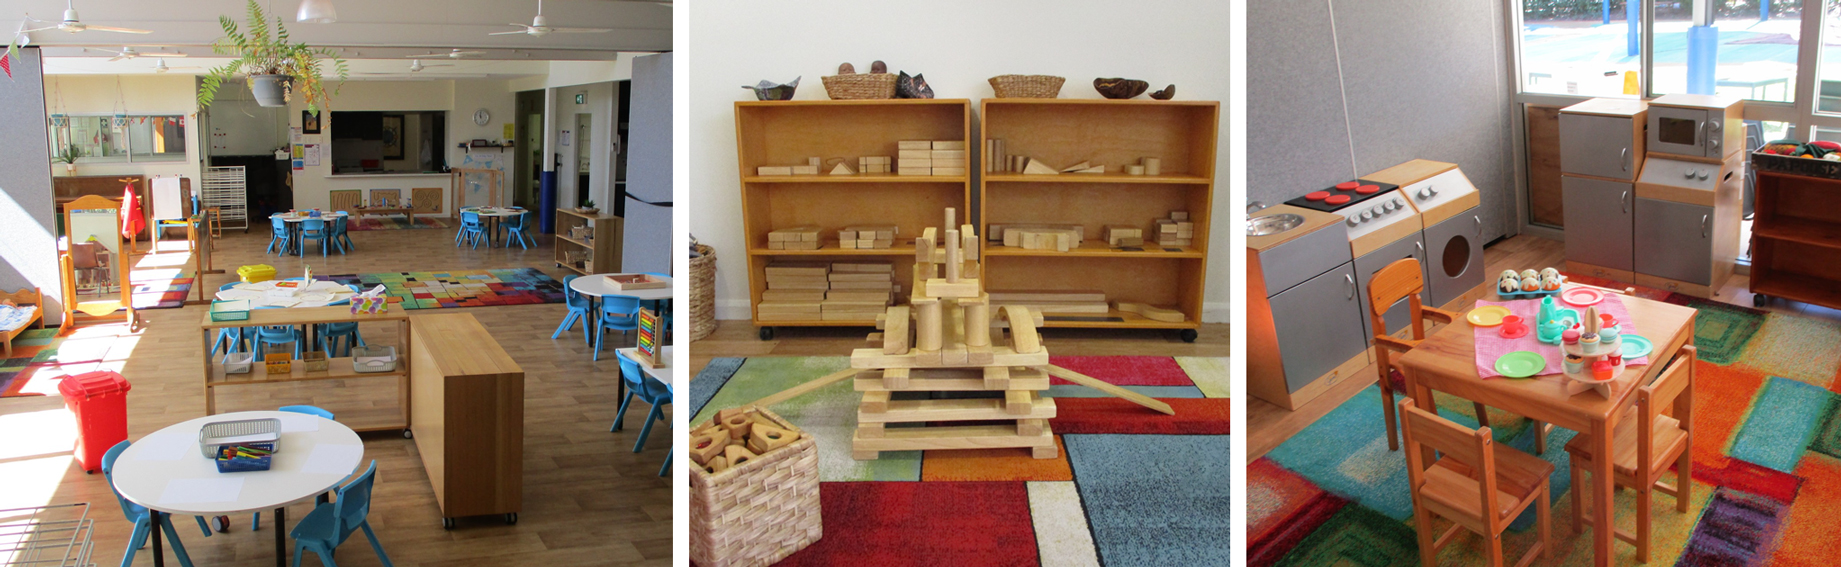 castle-hill-preschool-indoor-environment